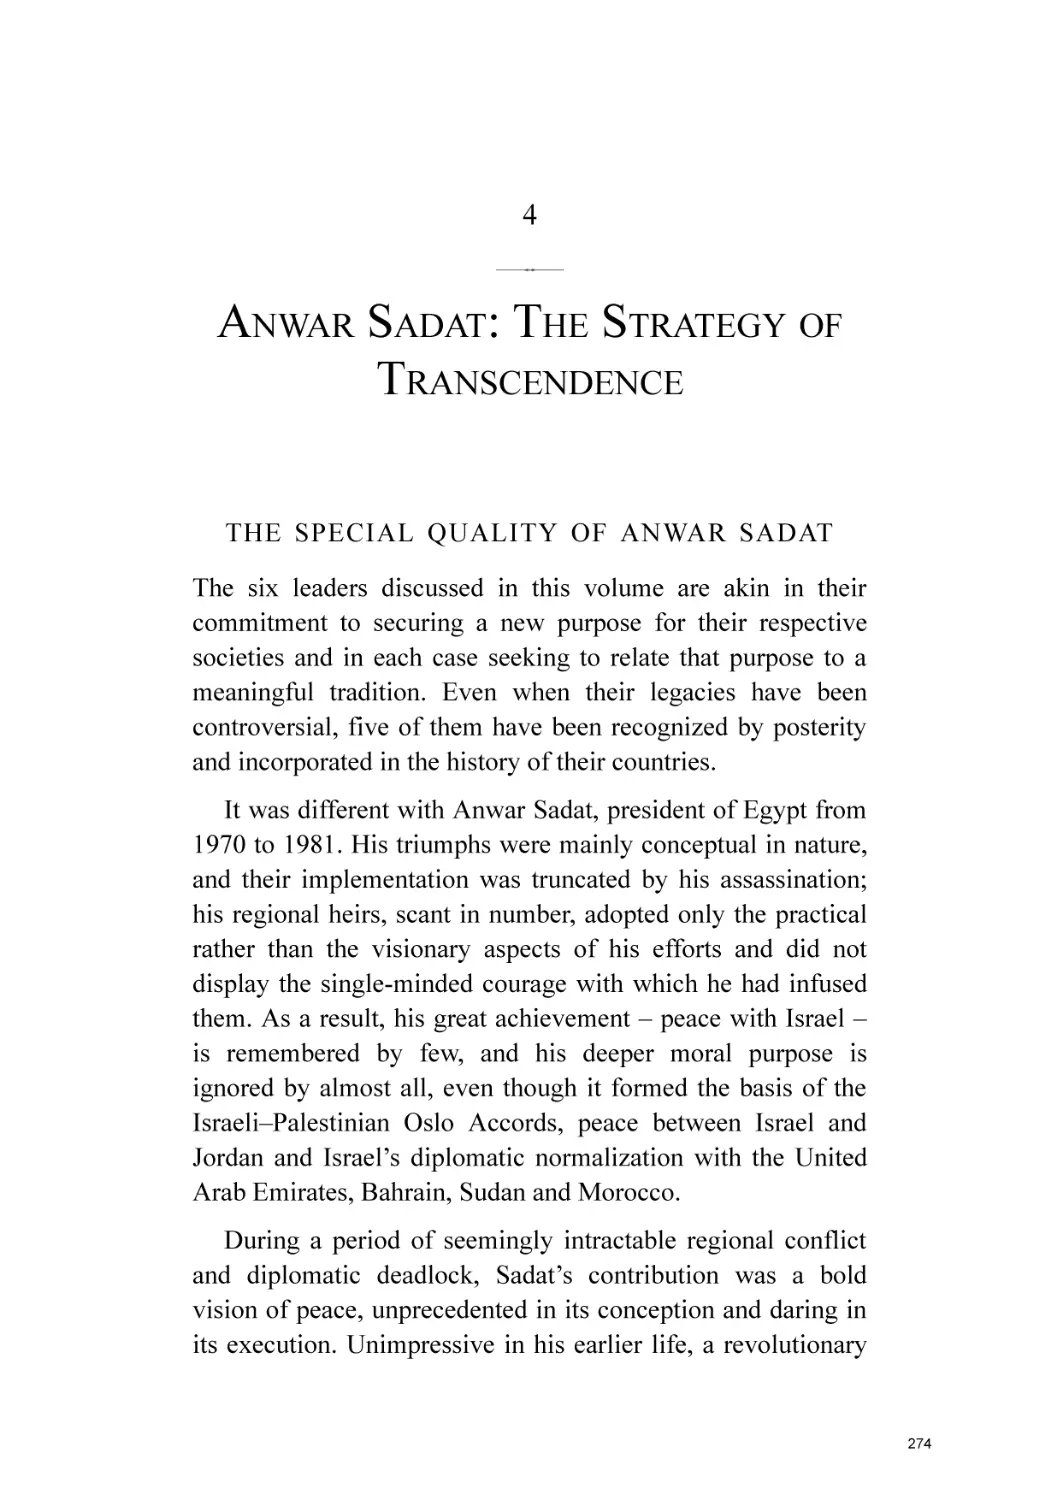 4. Anwar Sadat
The special quality of Anwar Sadat